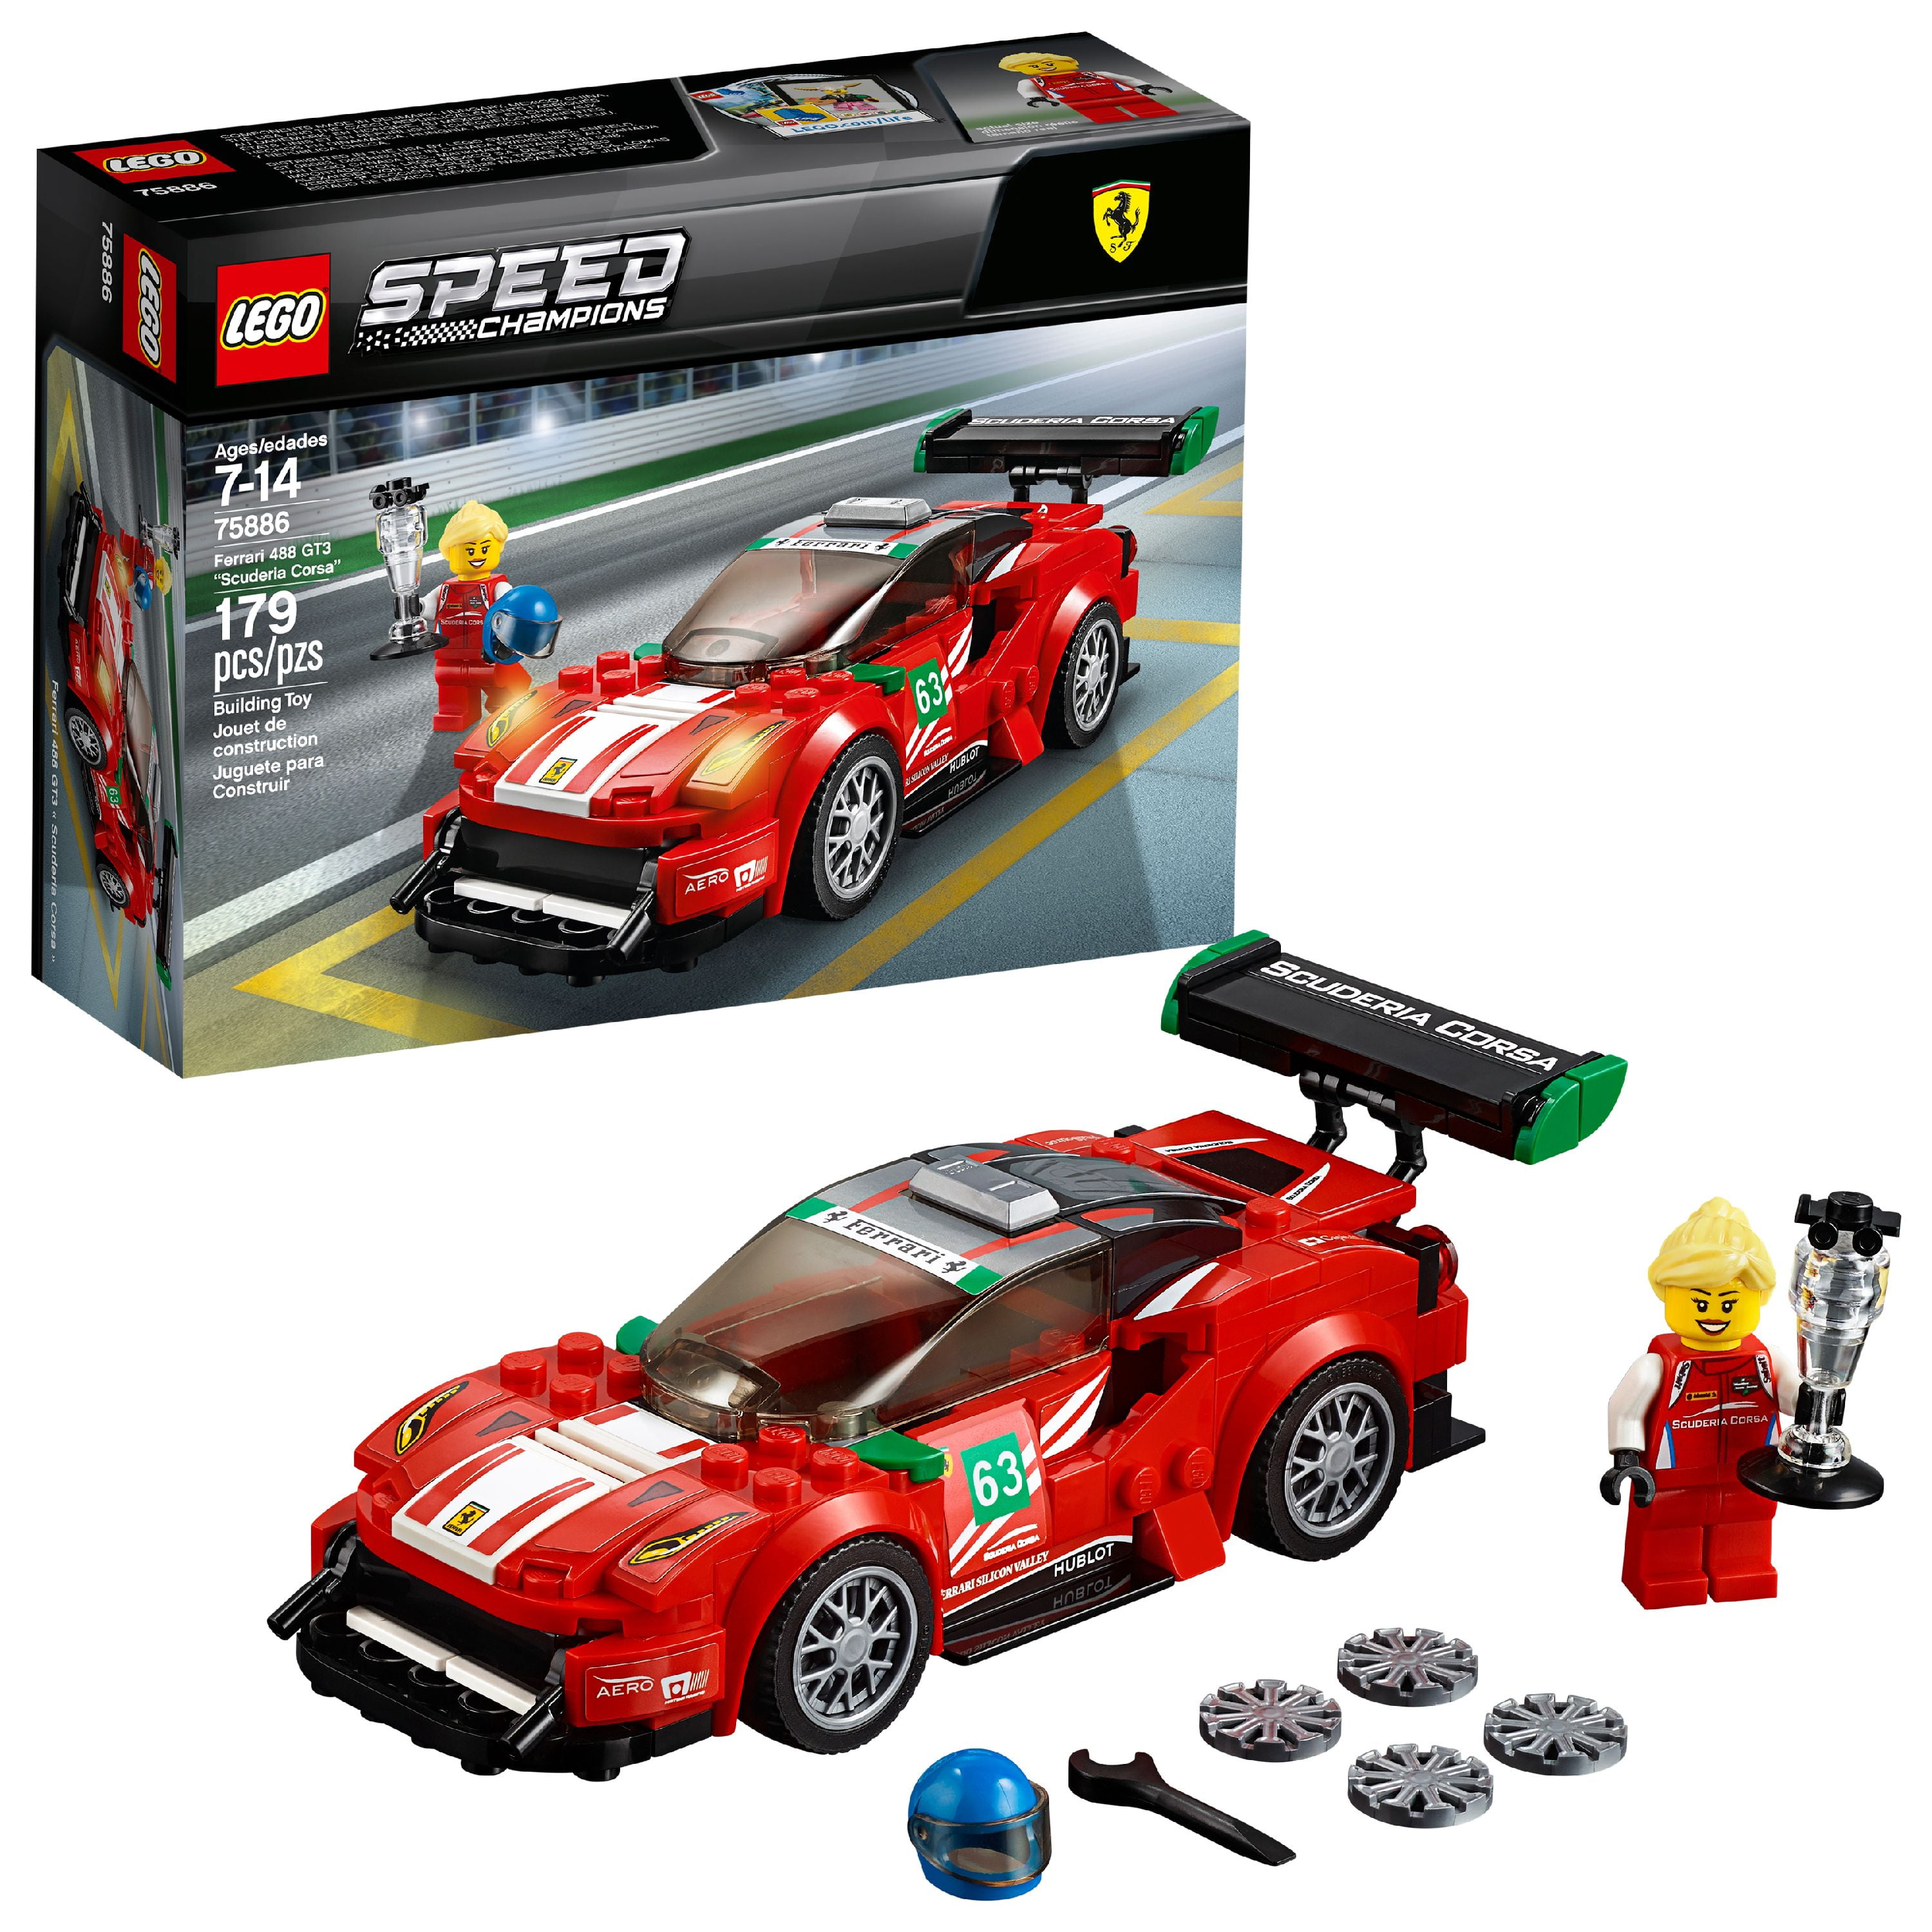 LEGO Speed Champions Ferrari 488 GT3 “Scuderia Corsa” 75886 Building Kit-179 Pcs